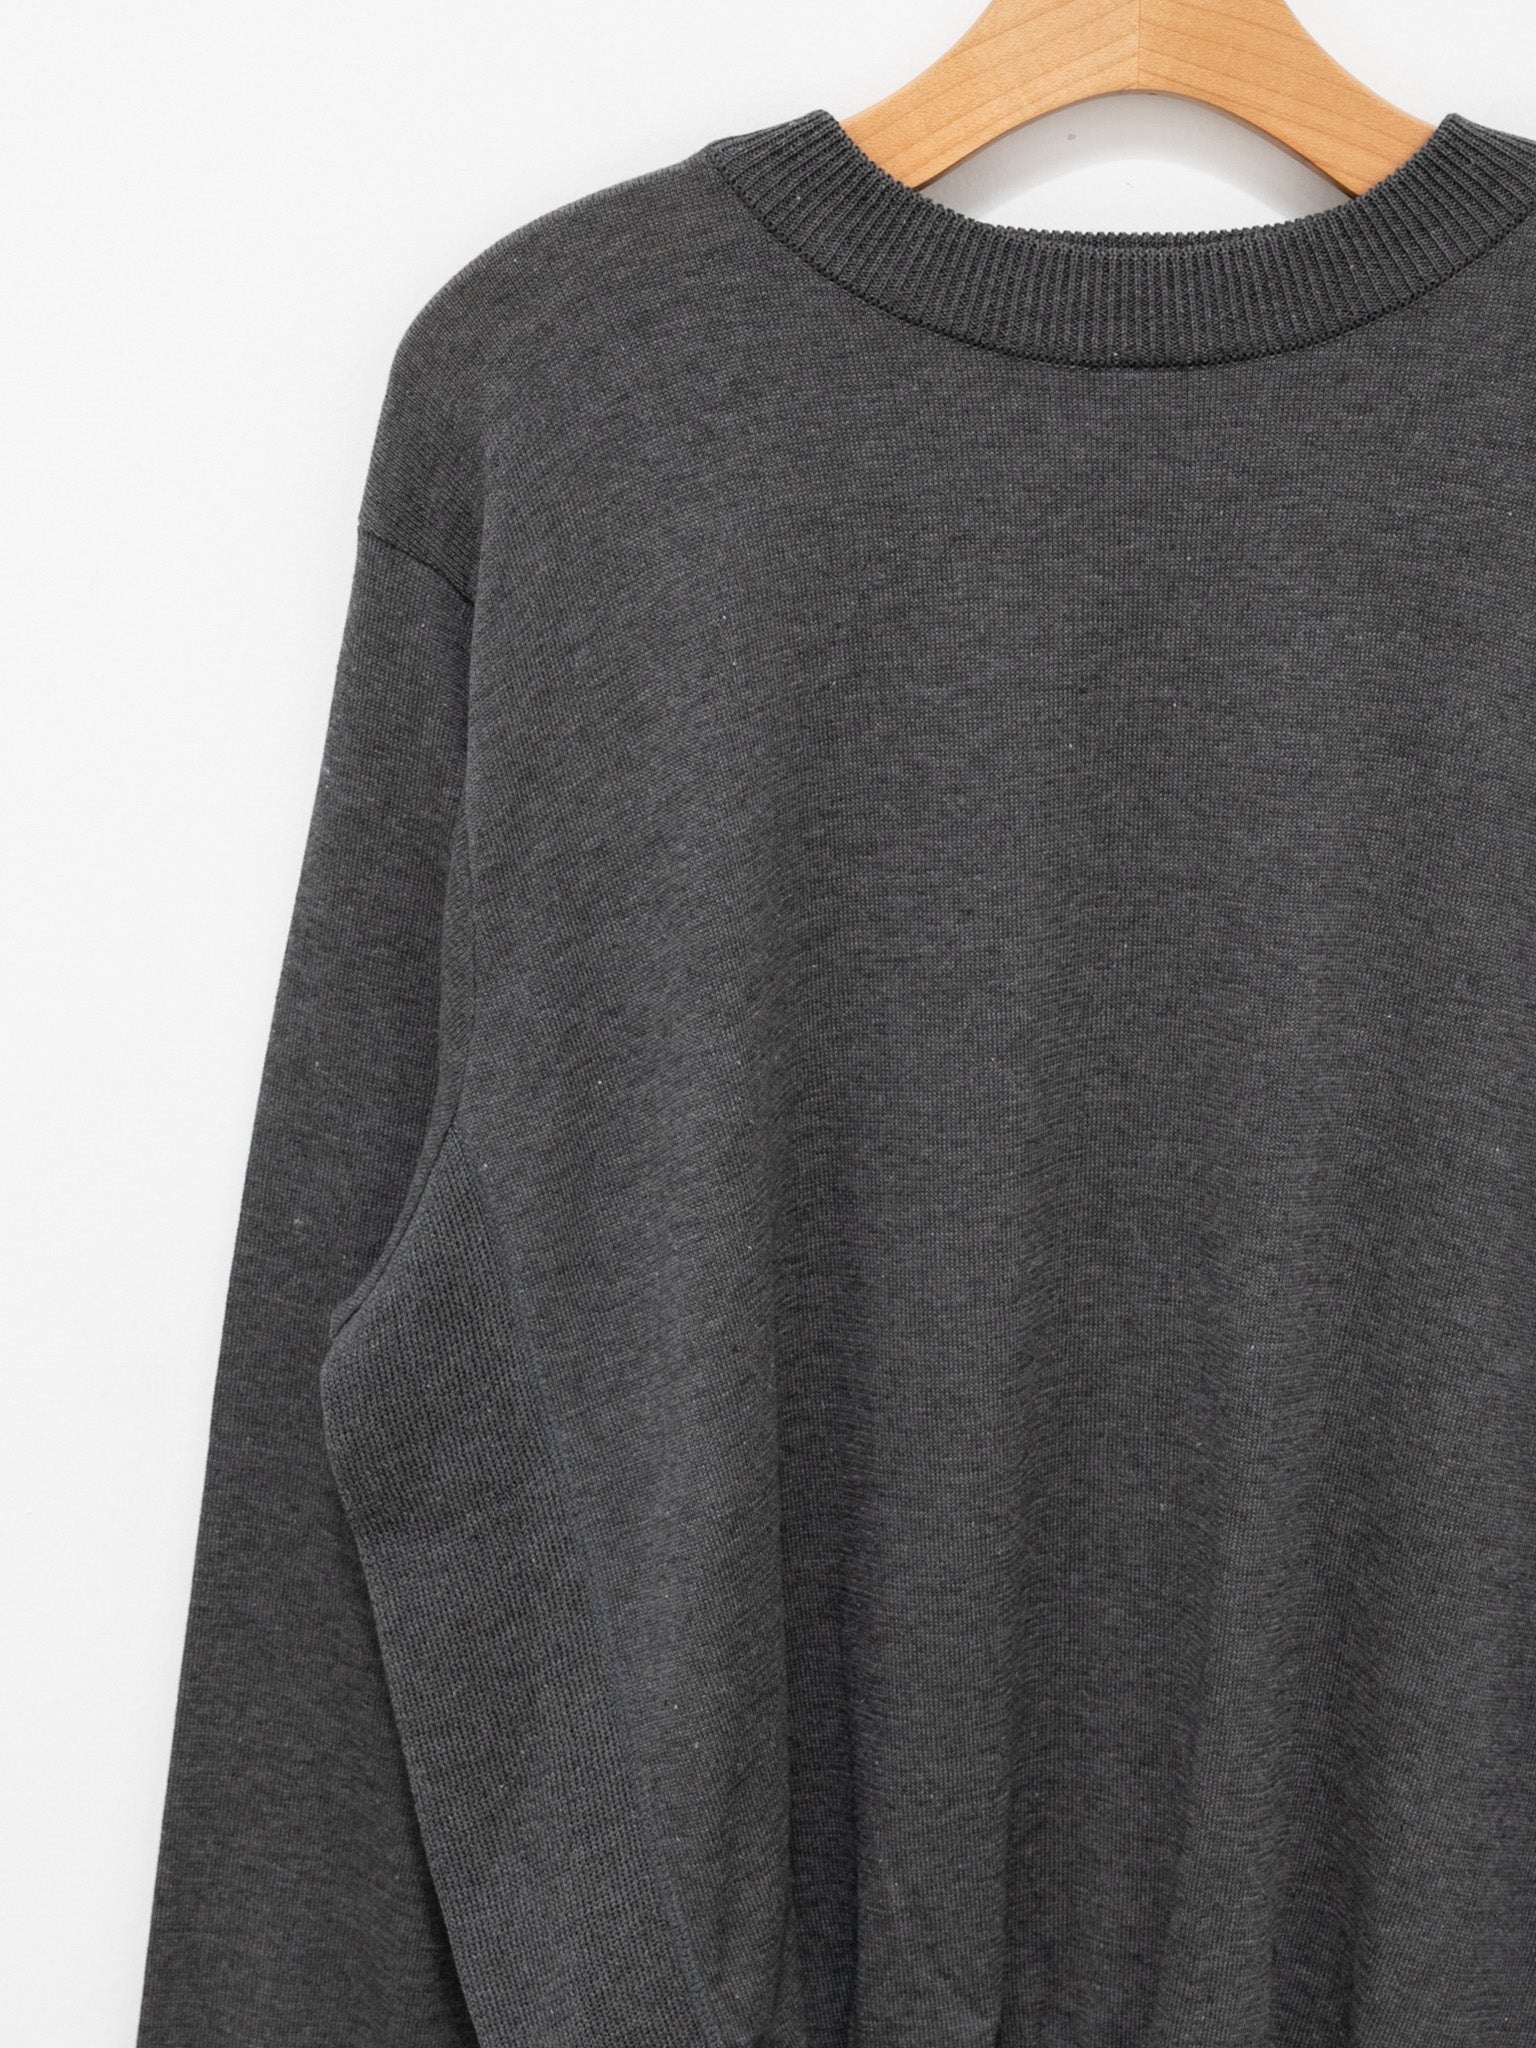 Namu Shop - Fujito Side Rib Sweater - Charcoal